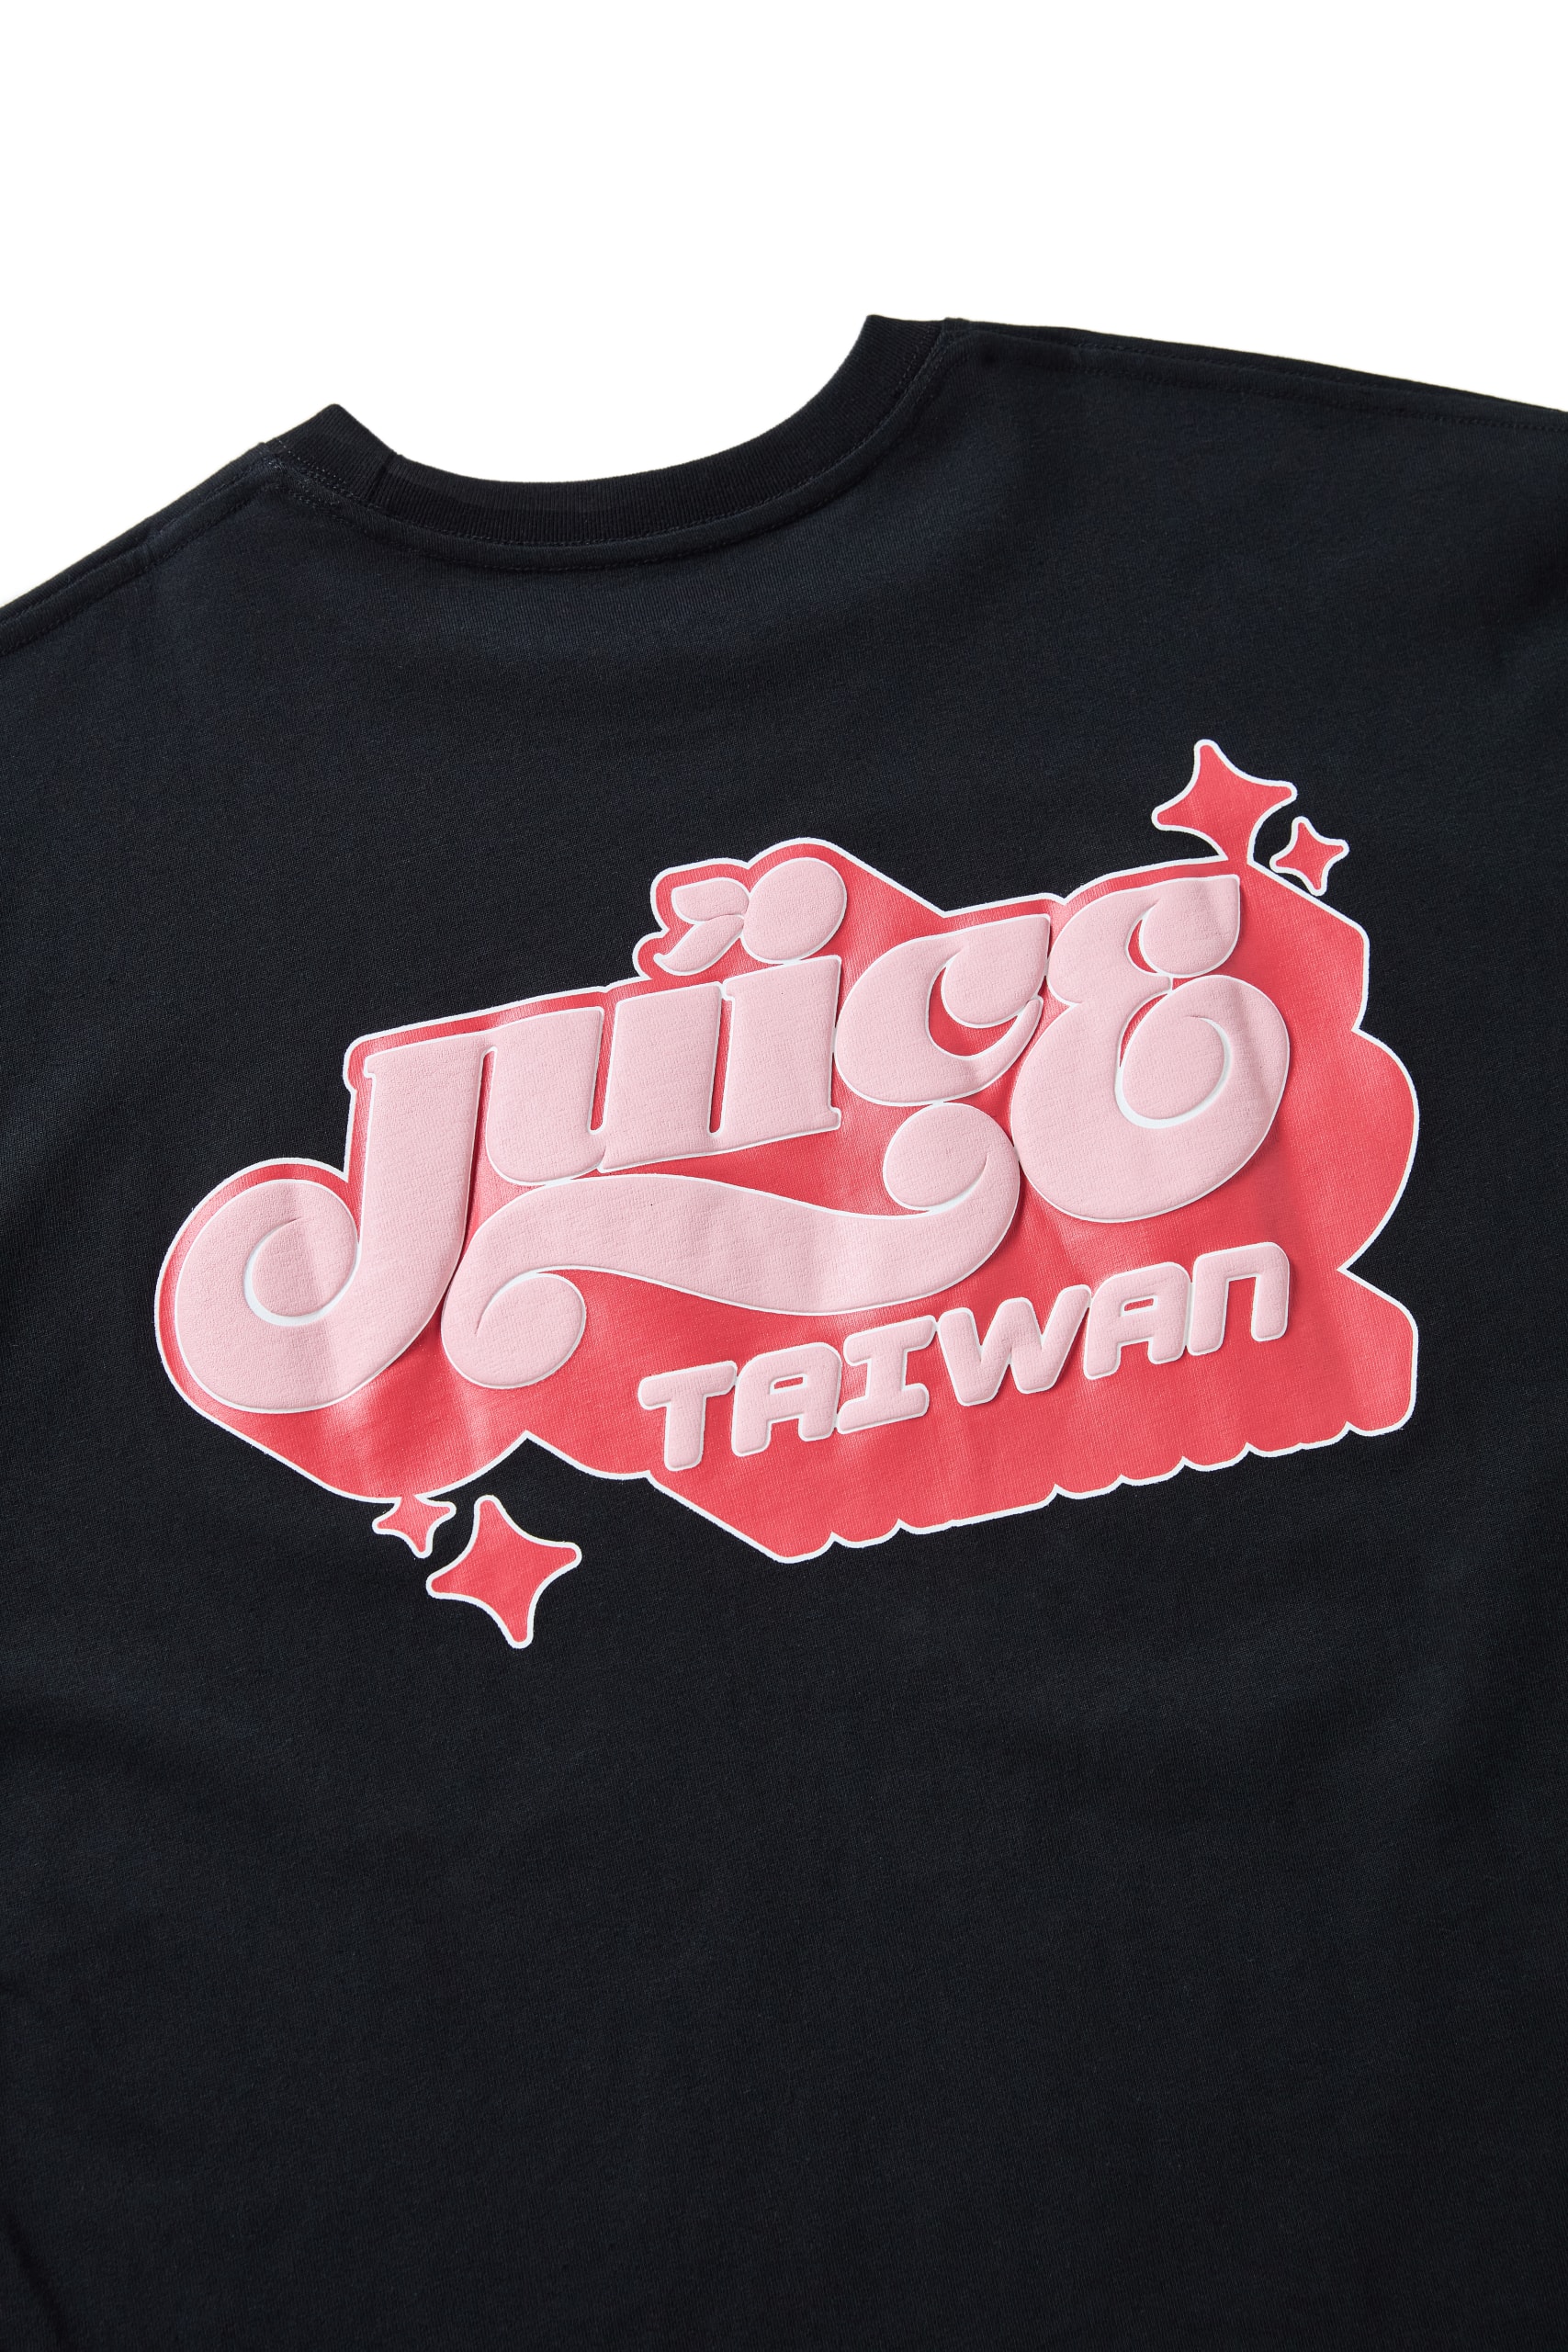 JUICE Taiwan 首款服飾系列 JUICE MERCH 正式登場